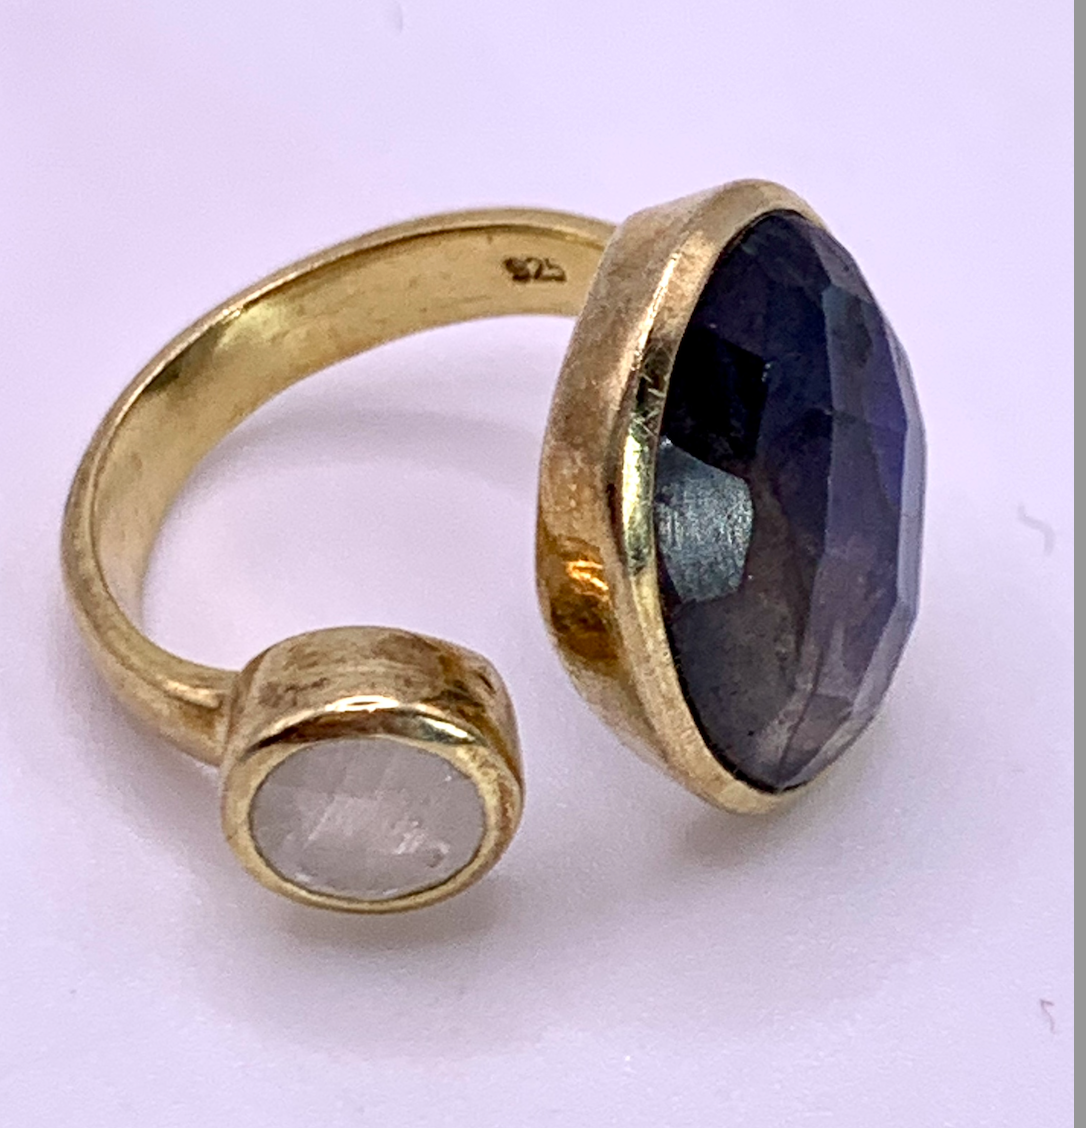 Labradorite and Moonstone Adjustable Ring